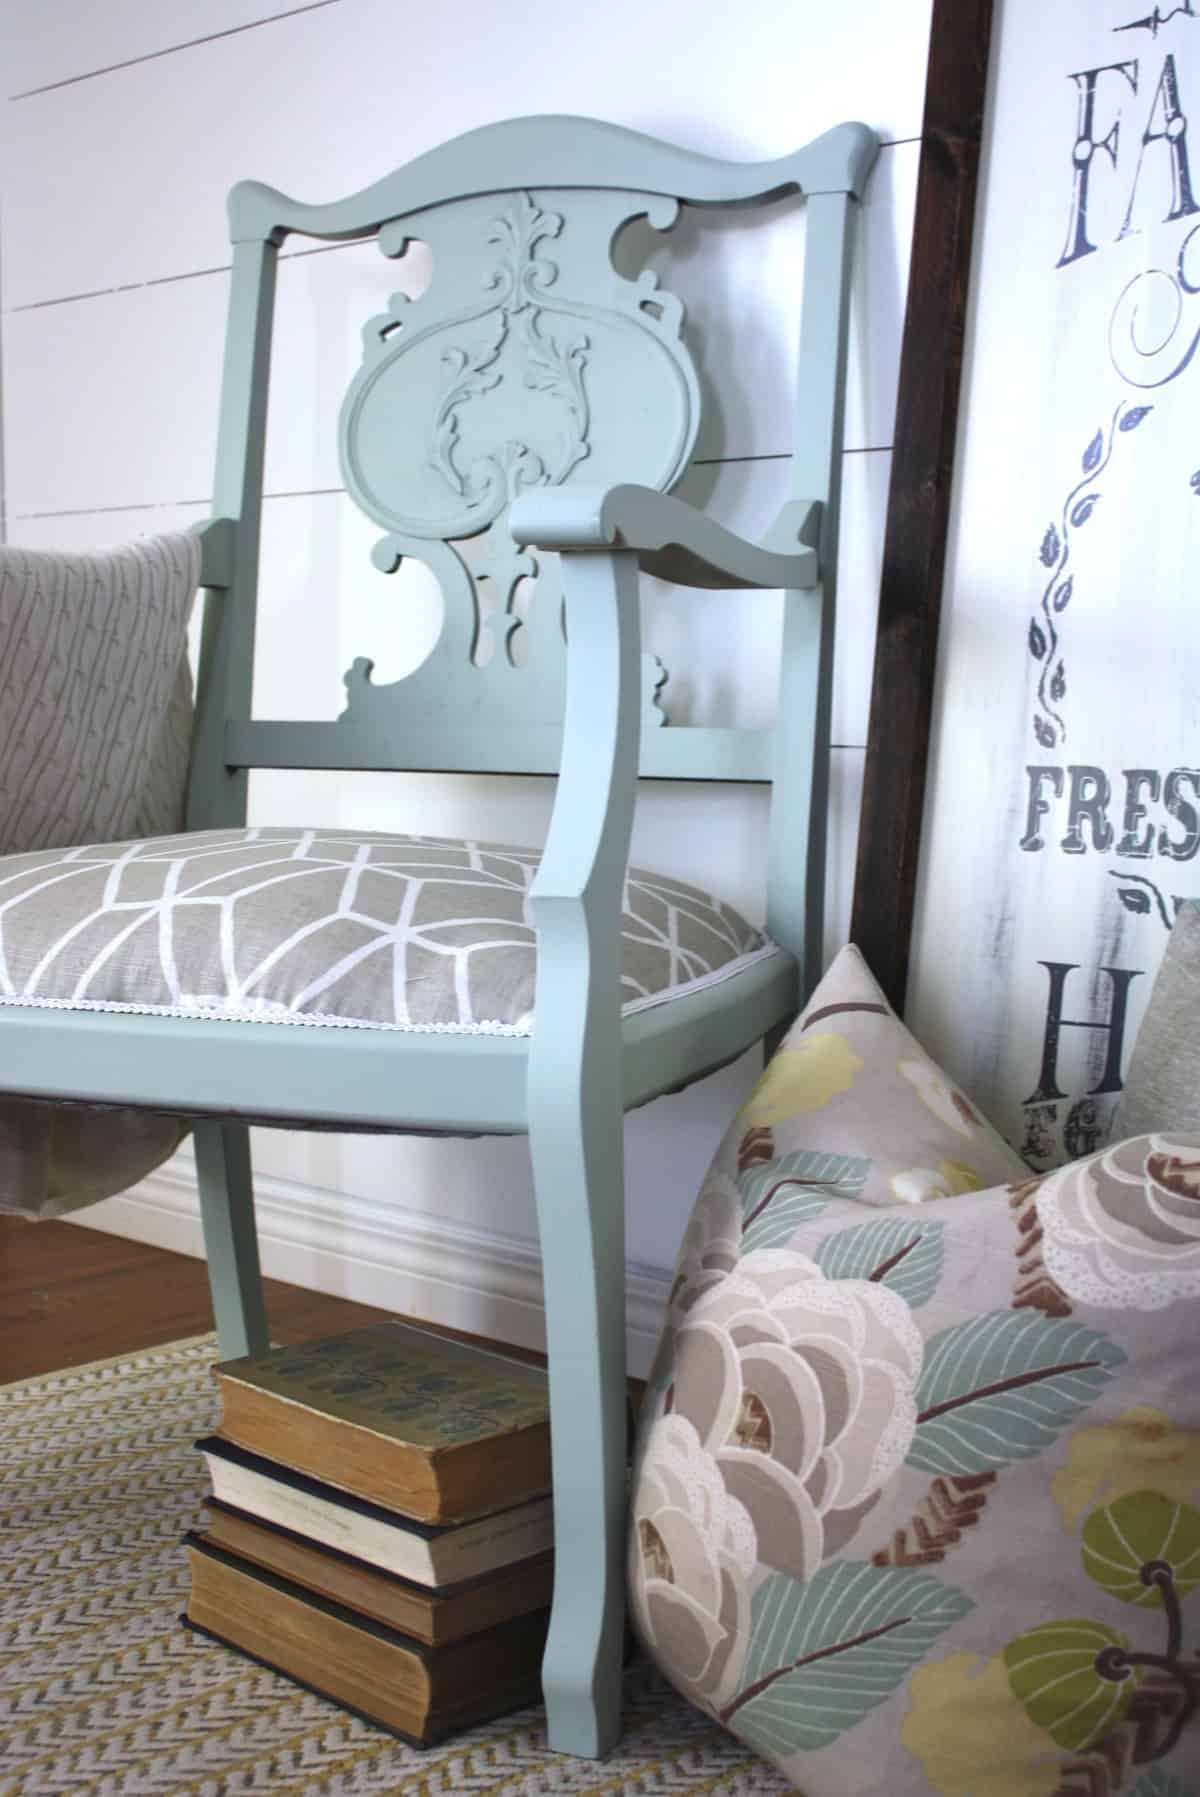 Happy Hour Chair #DIY #furniturepaint #paintedfurniture #chalkpaint #mintgreen #happyhour #occasionalchair #homedecor #countrychicpaint - blog.countrychicpaint.com